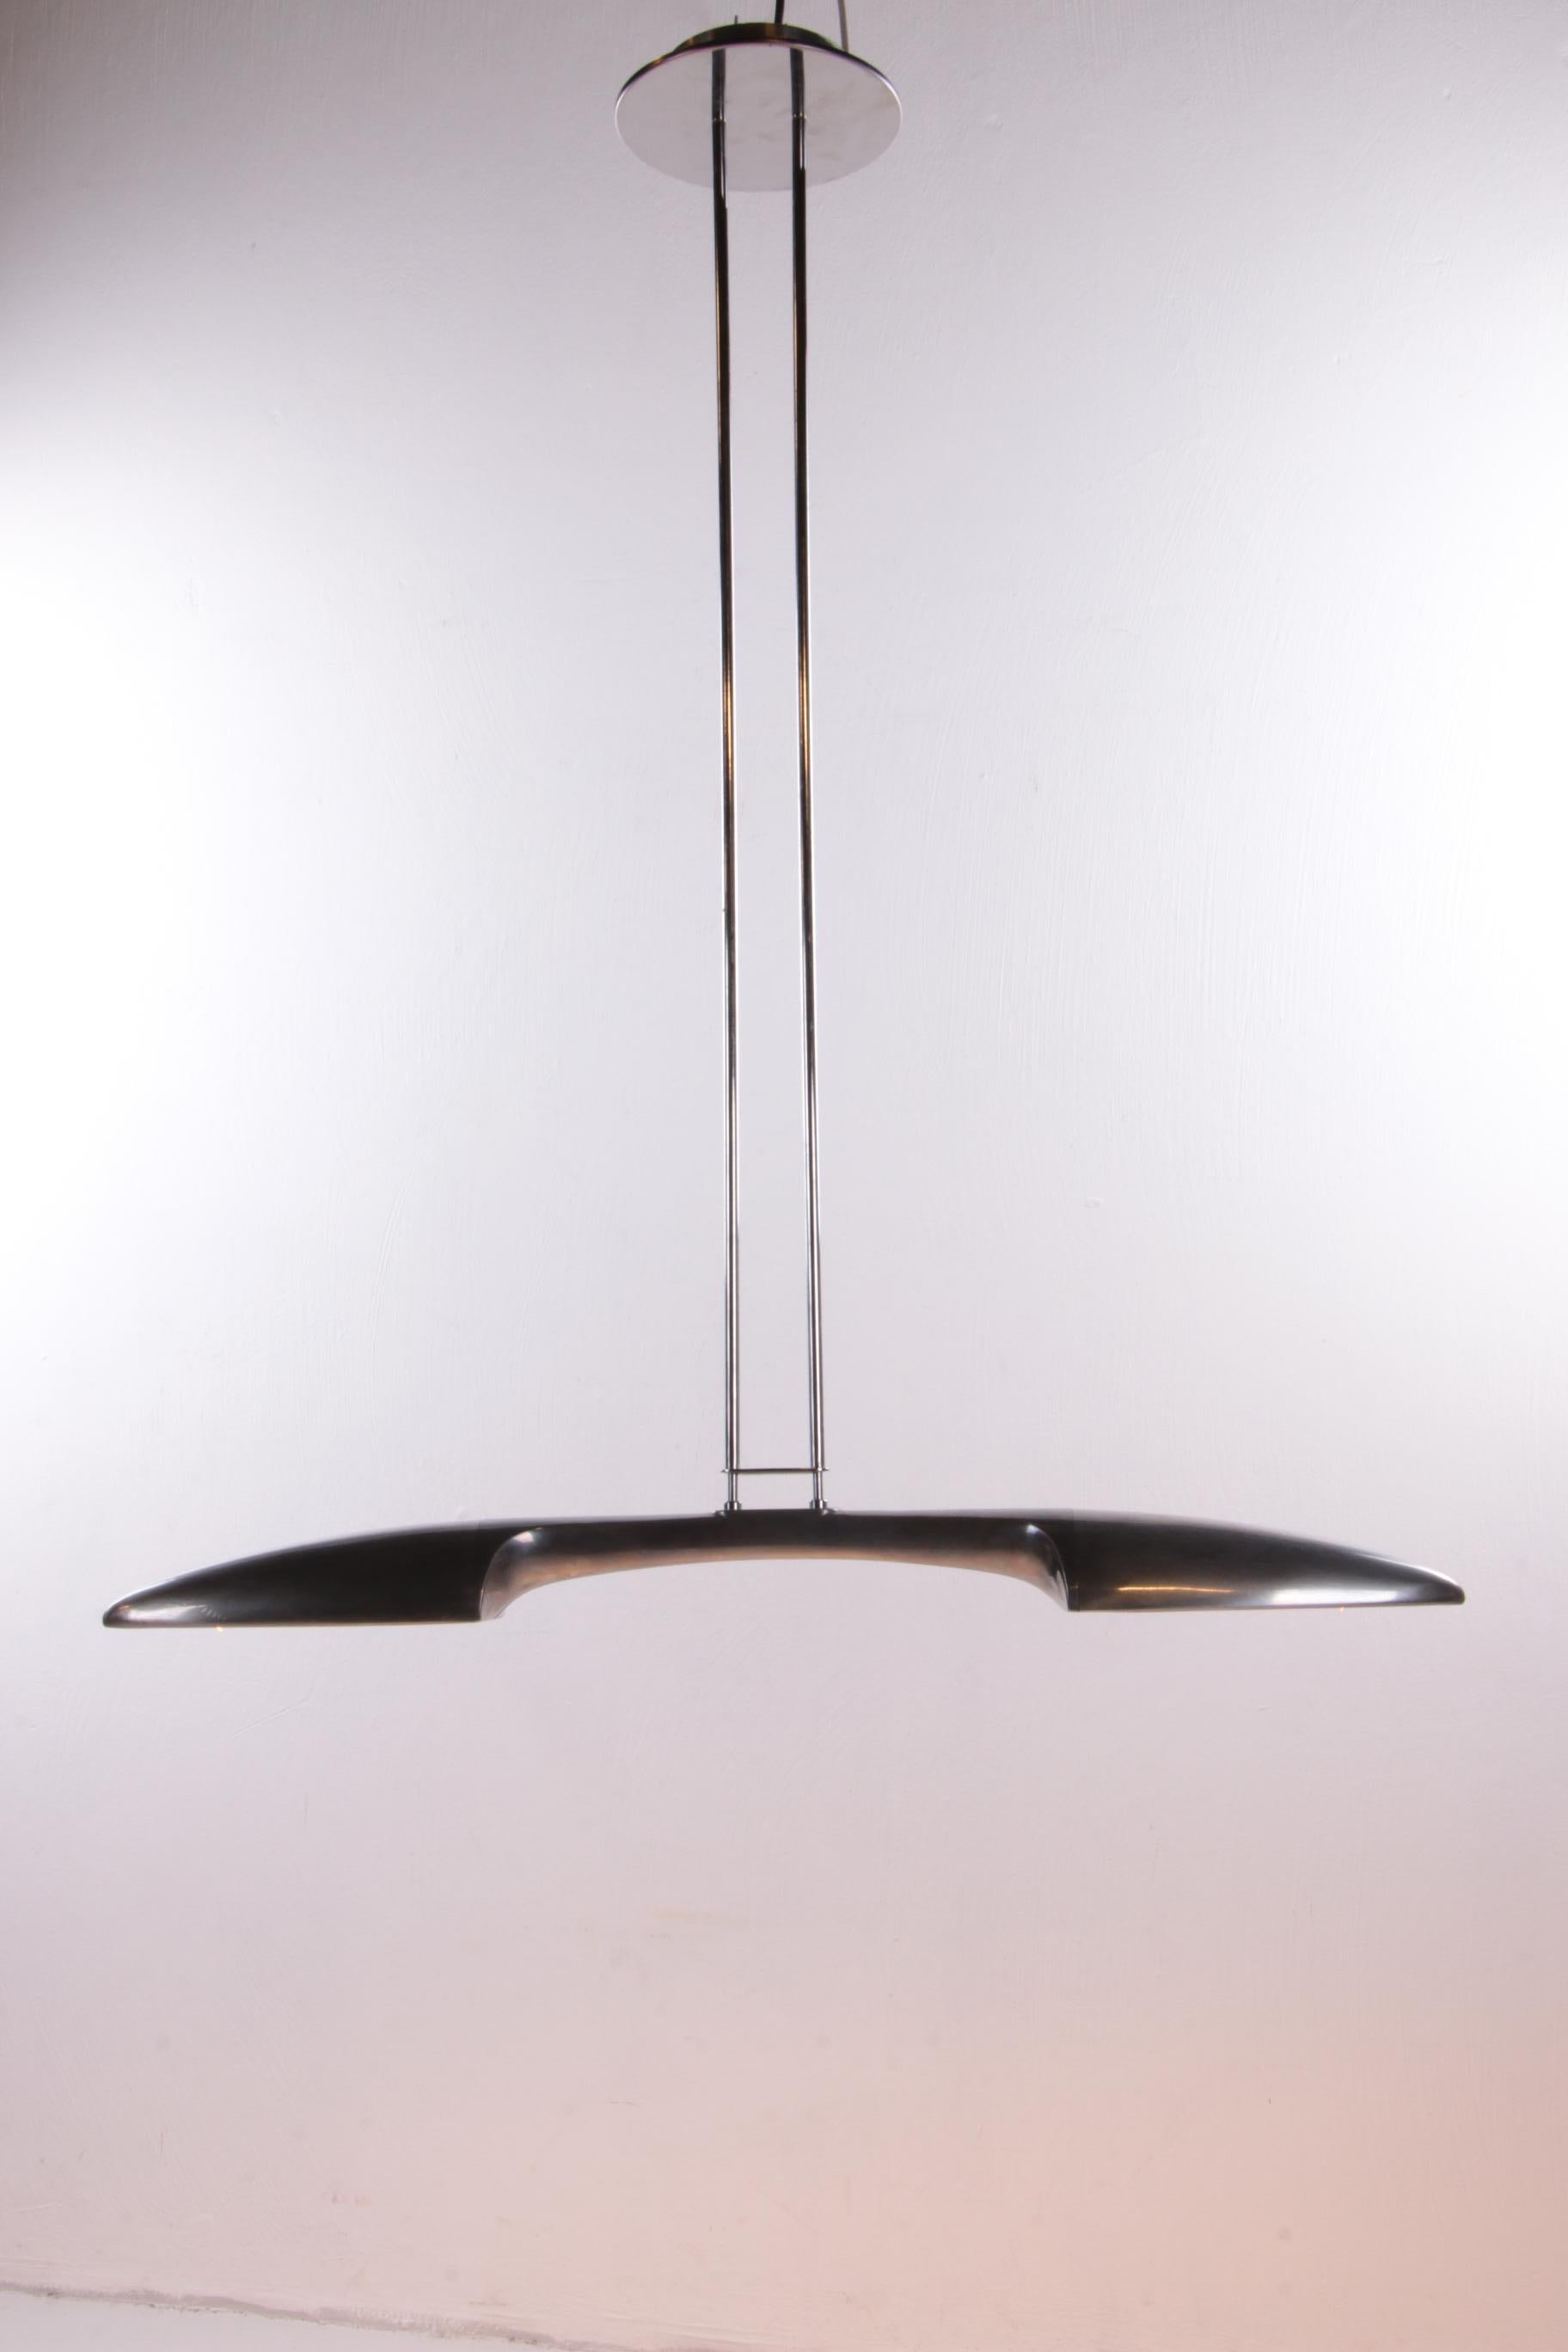 Spanish Hanging Lamp Aluminum Design by Jorge Pensi for B-Lux Spain 1980